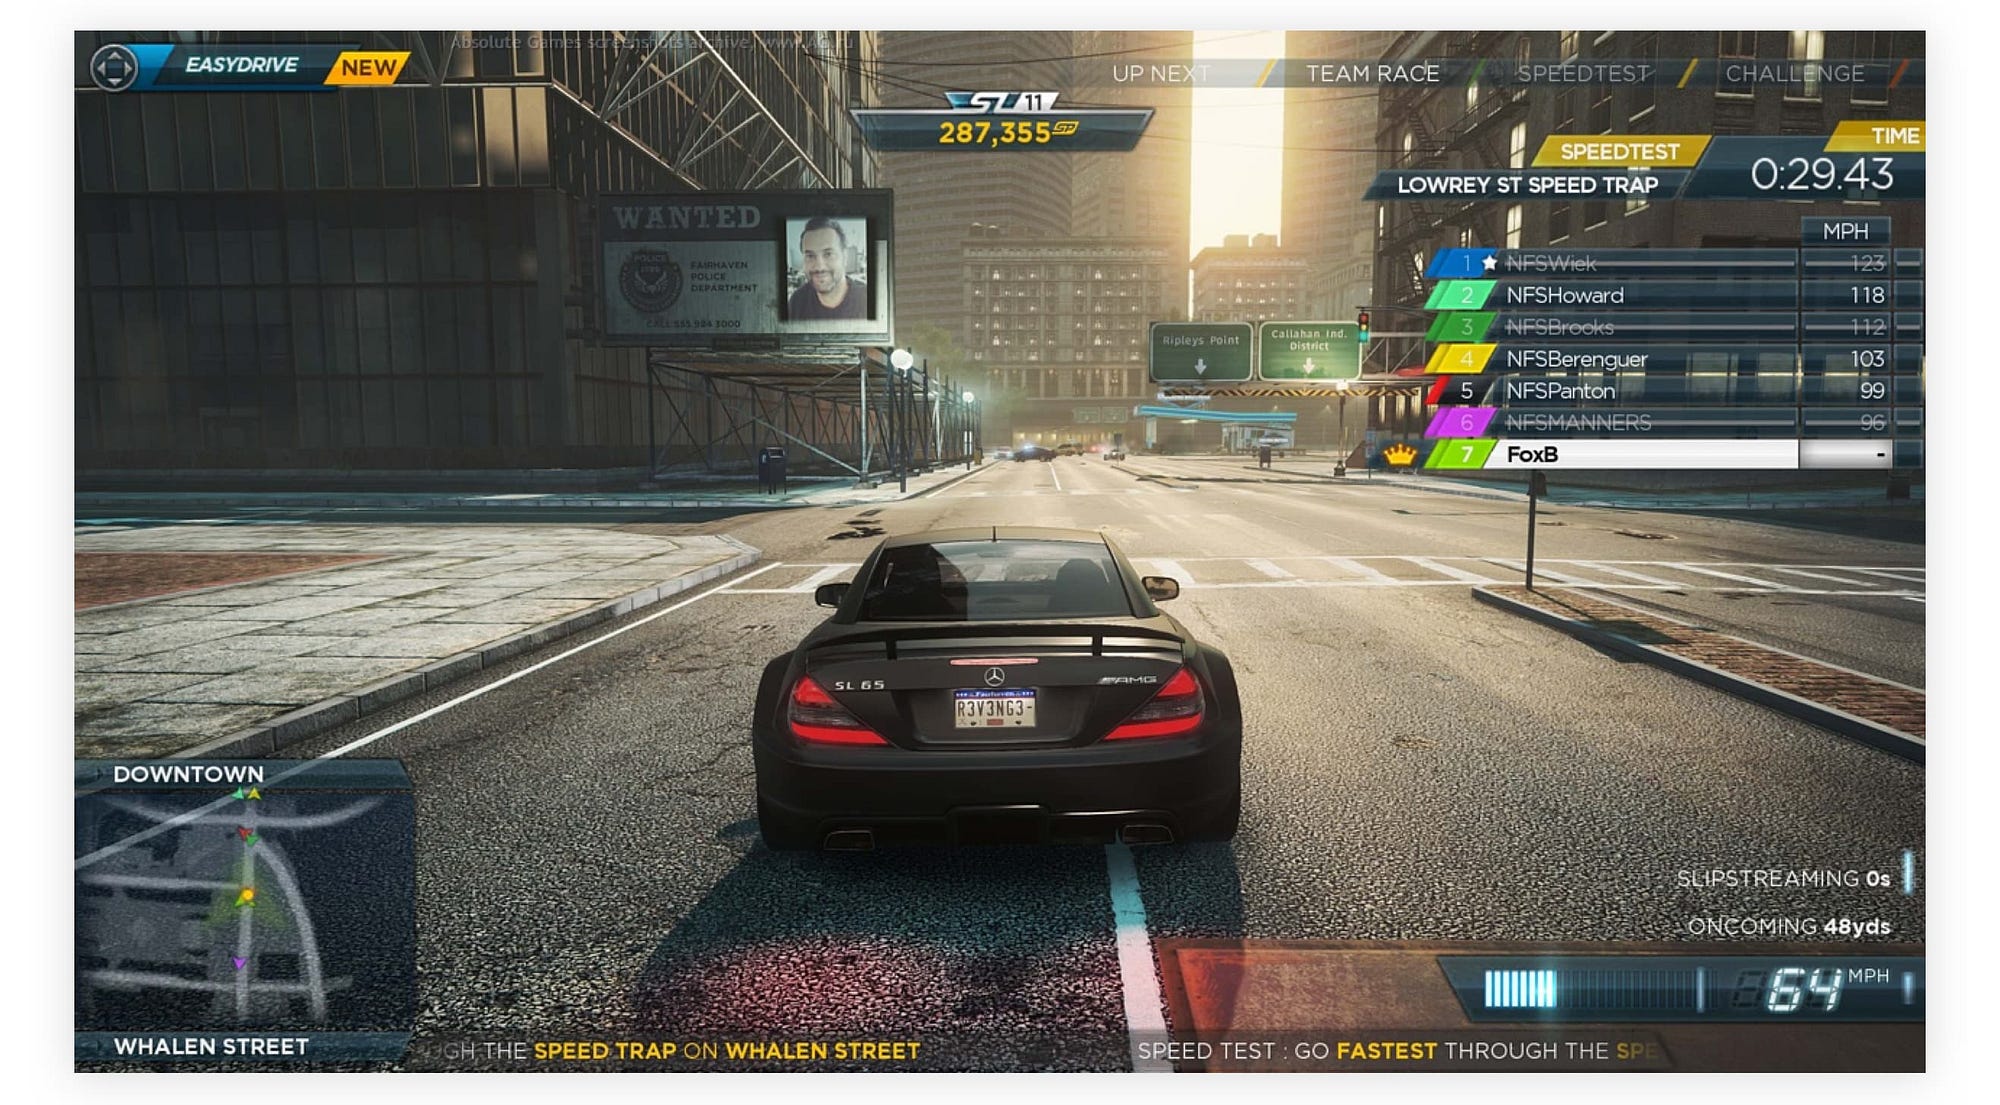 Racing Game Tactic Cars 3 - Jogos de Tabuleiro - Compra na